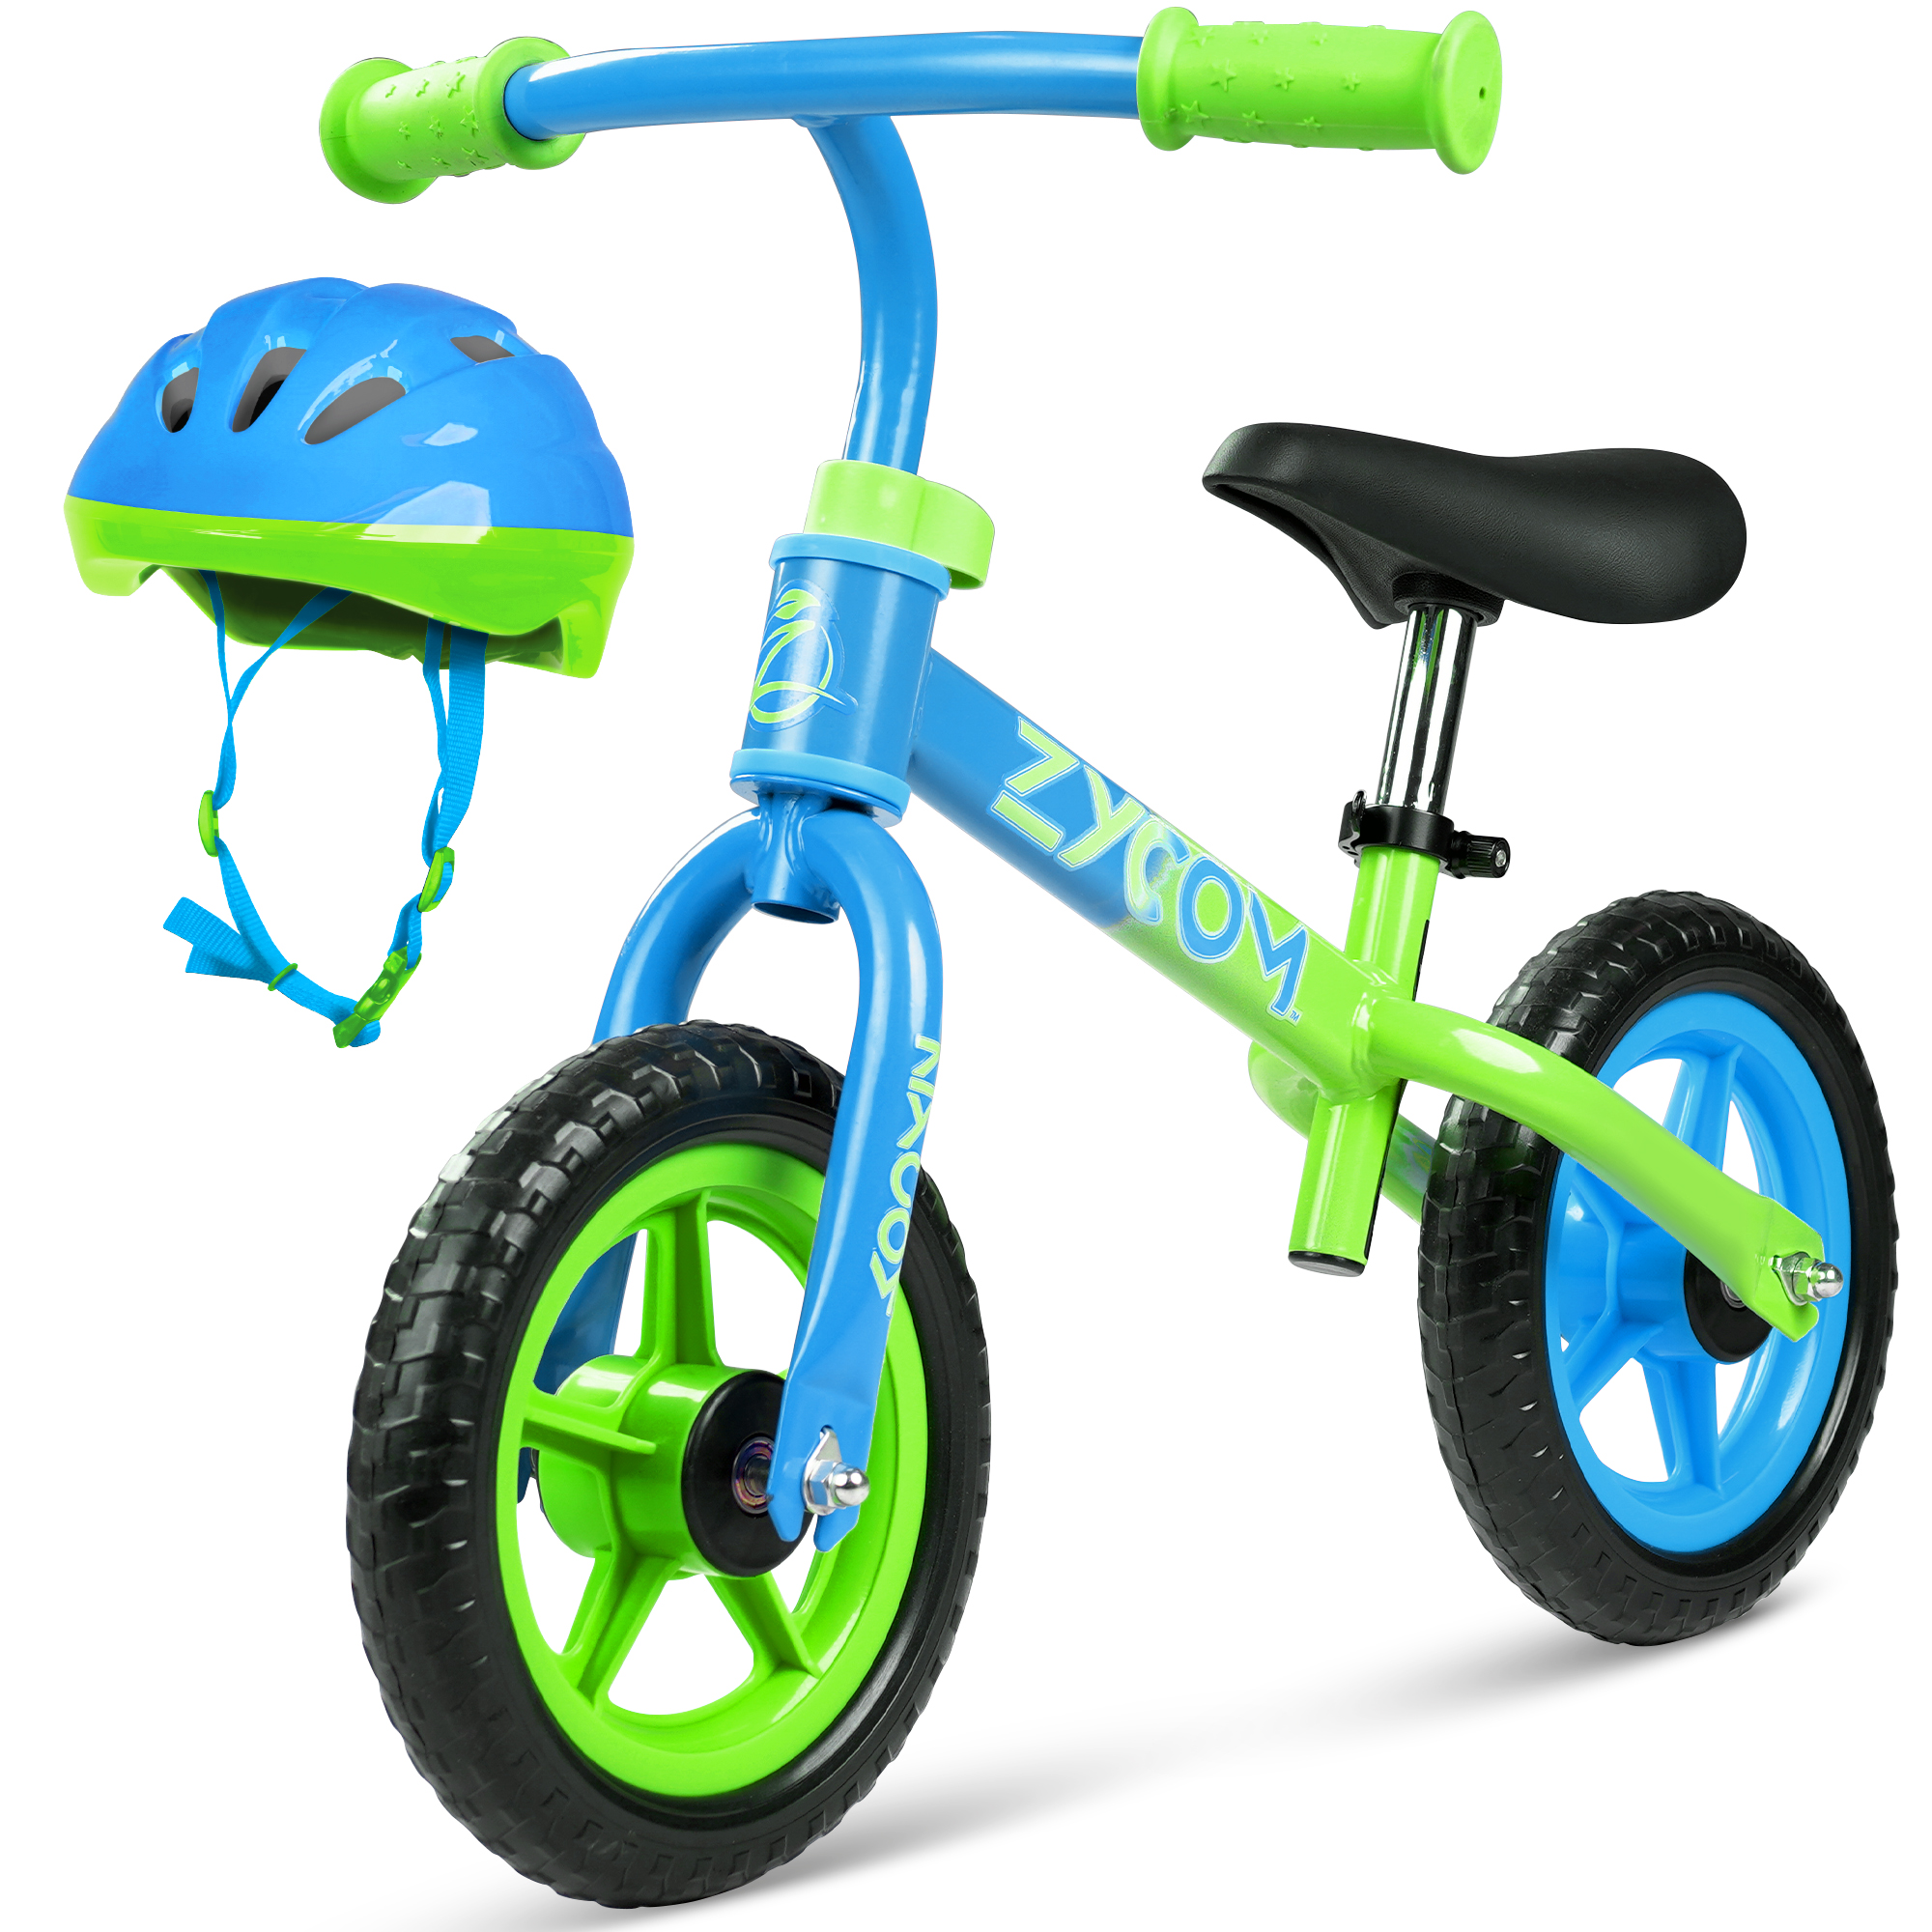 Zycom 10-inch Toddlers Balance Bike Adjustable Helmet Airless Wheels Lightweight Training Bike Blue - image 1 of 12